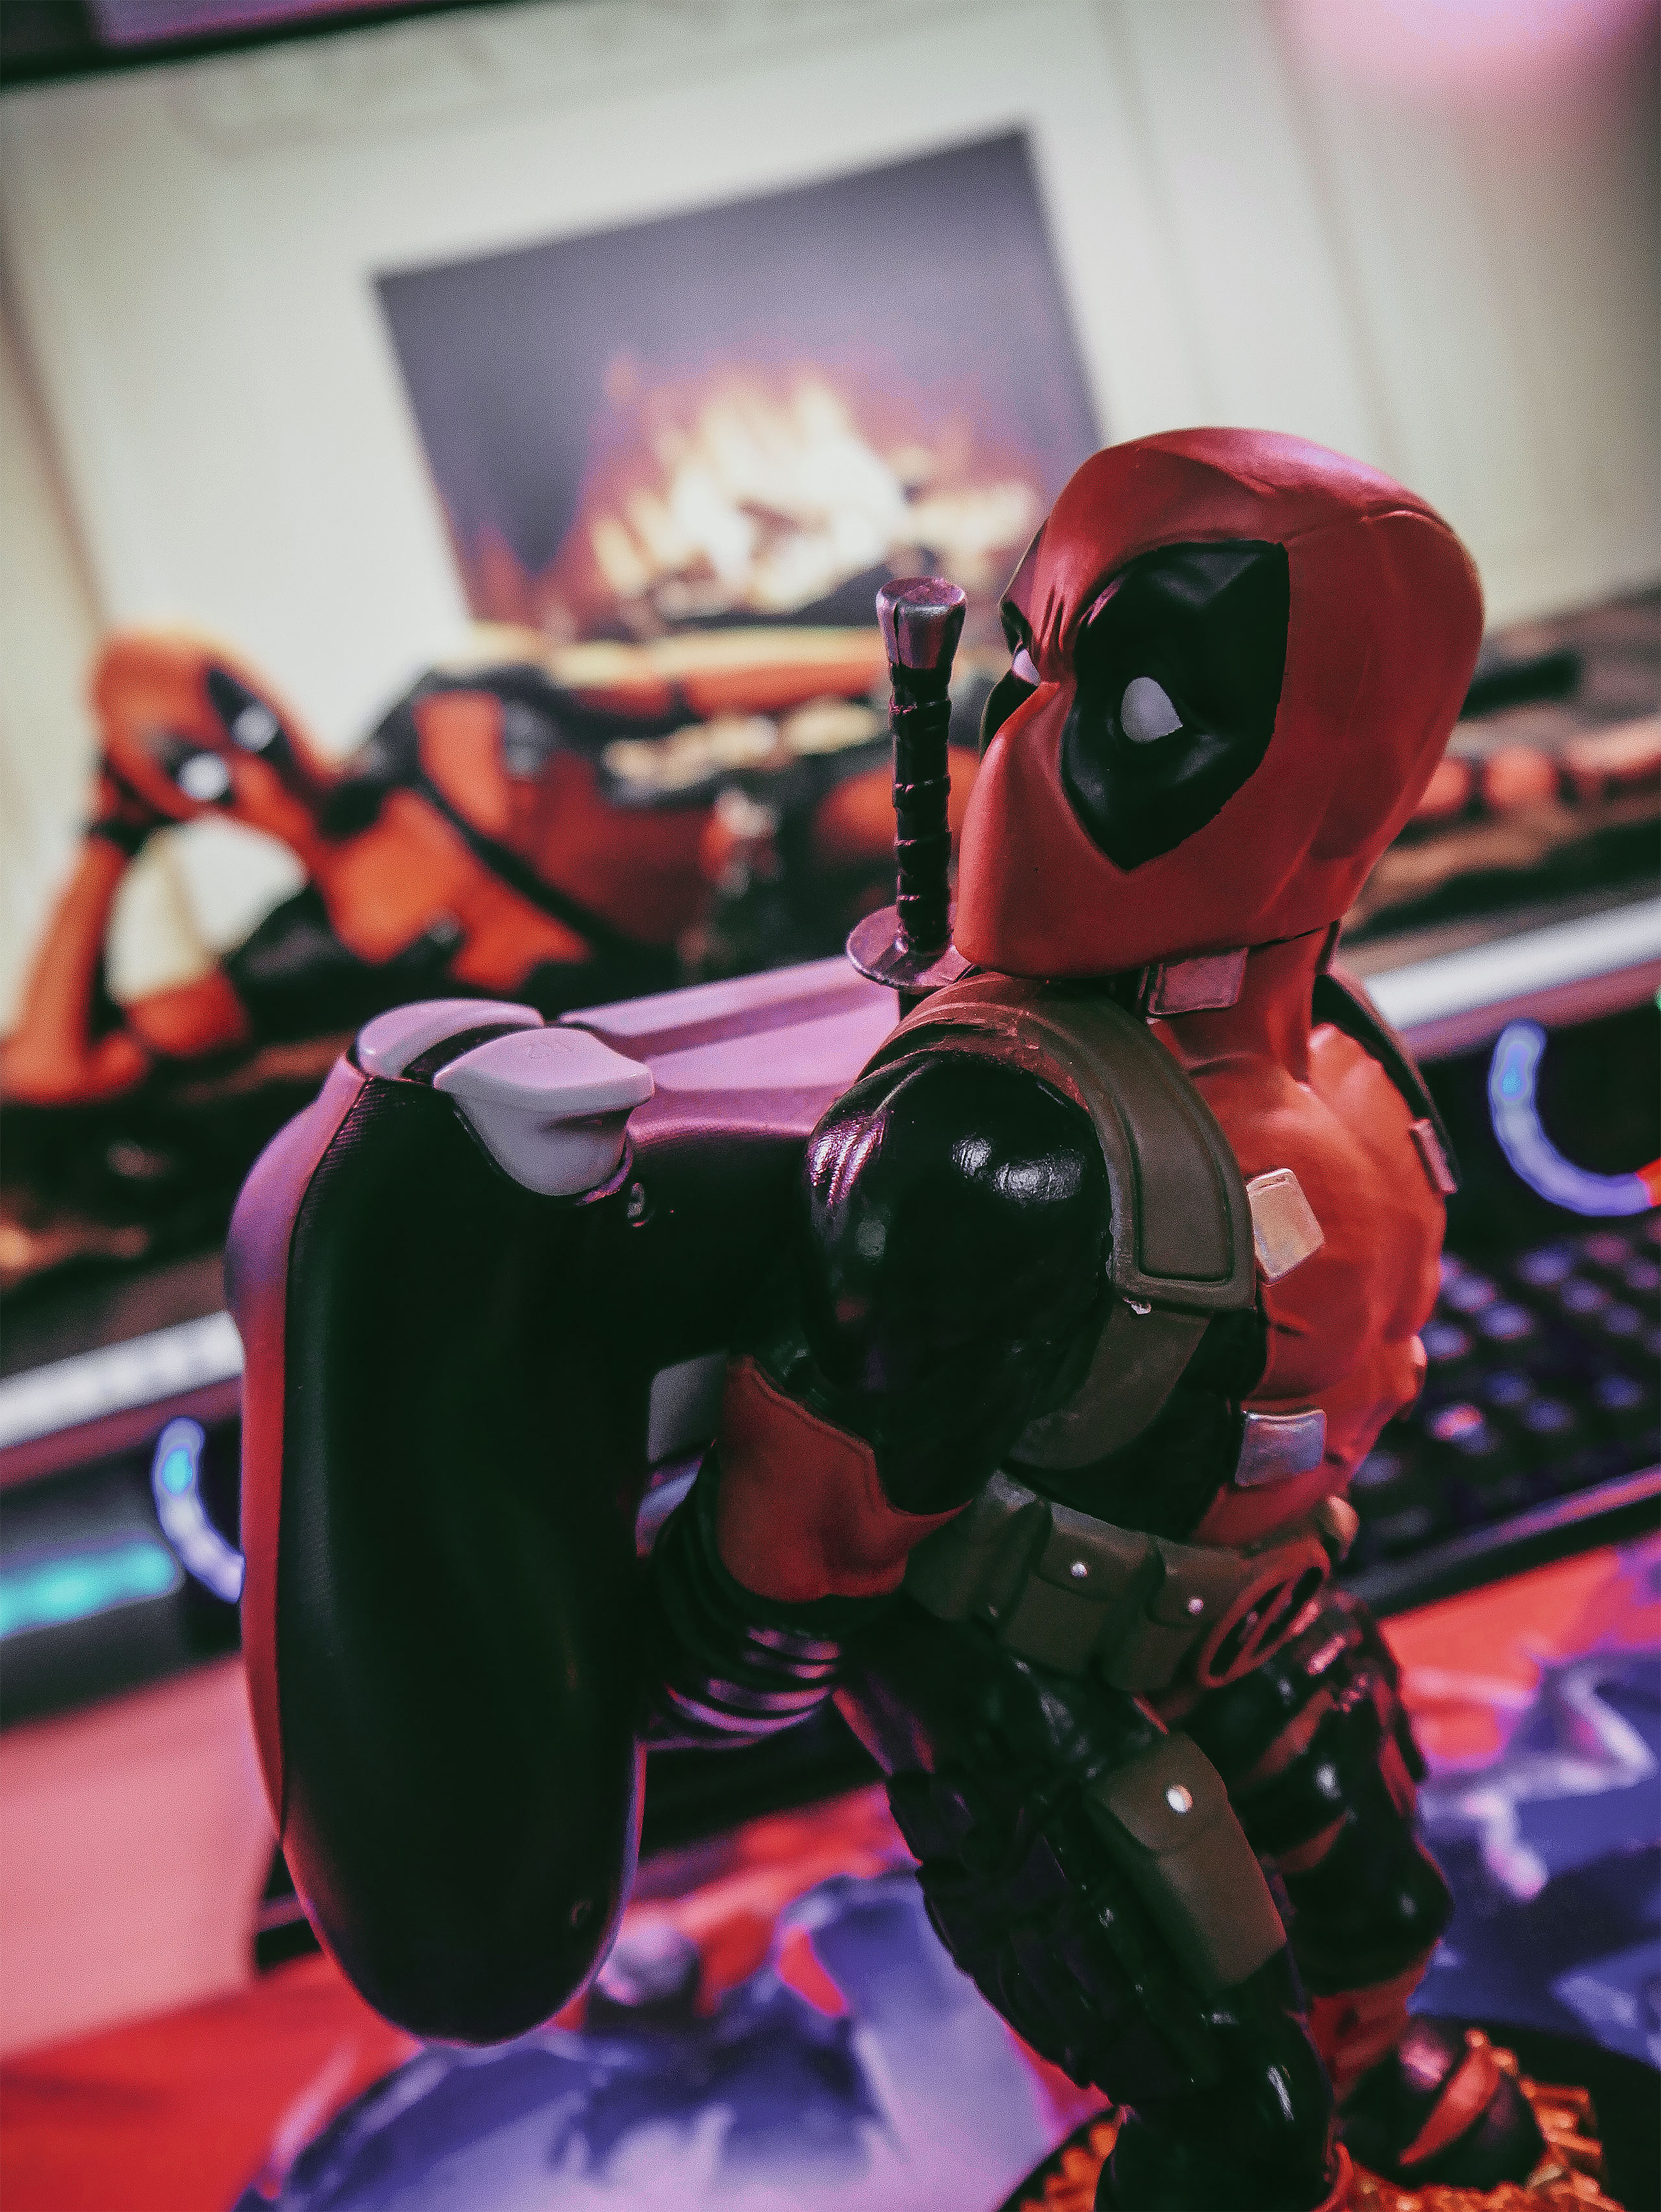 Deadpool 2019 - Cable Guy Figure